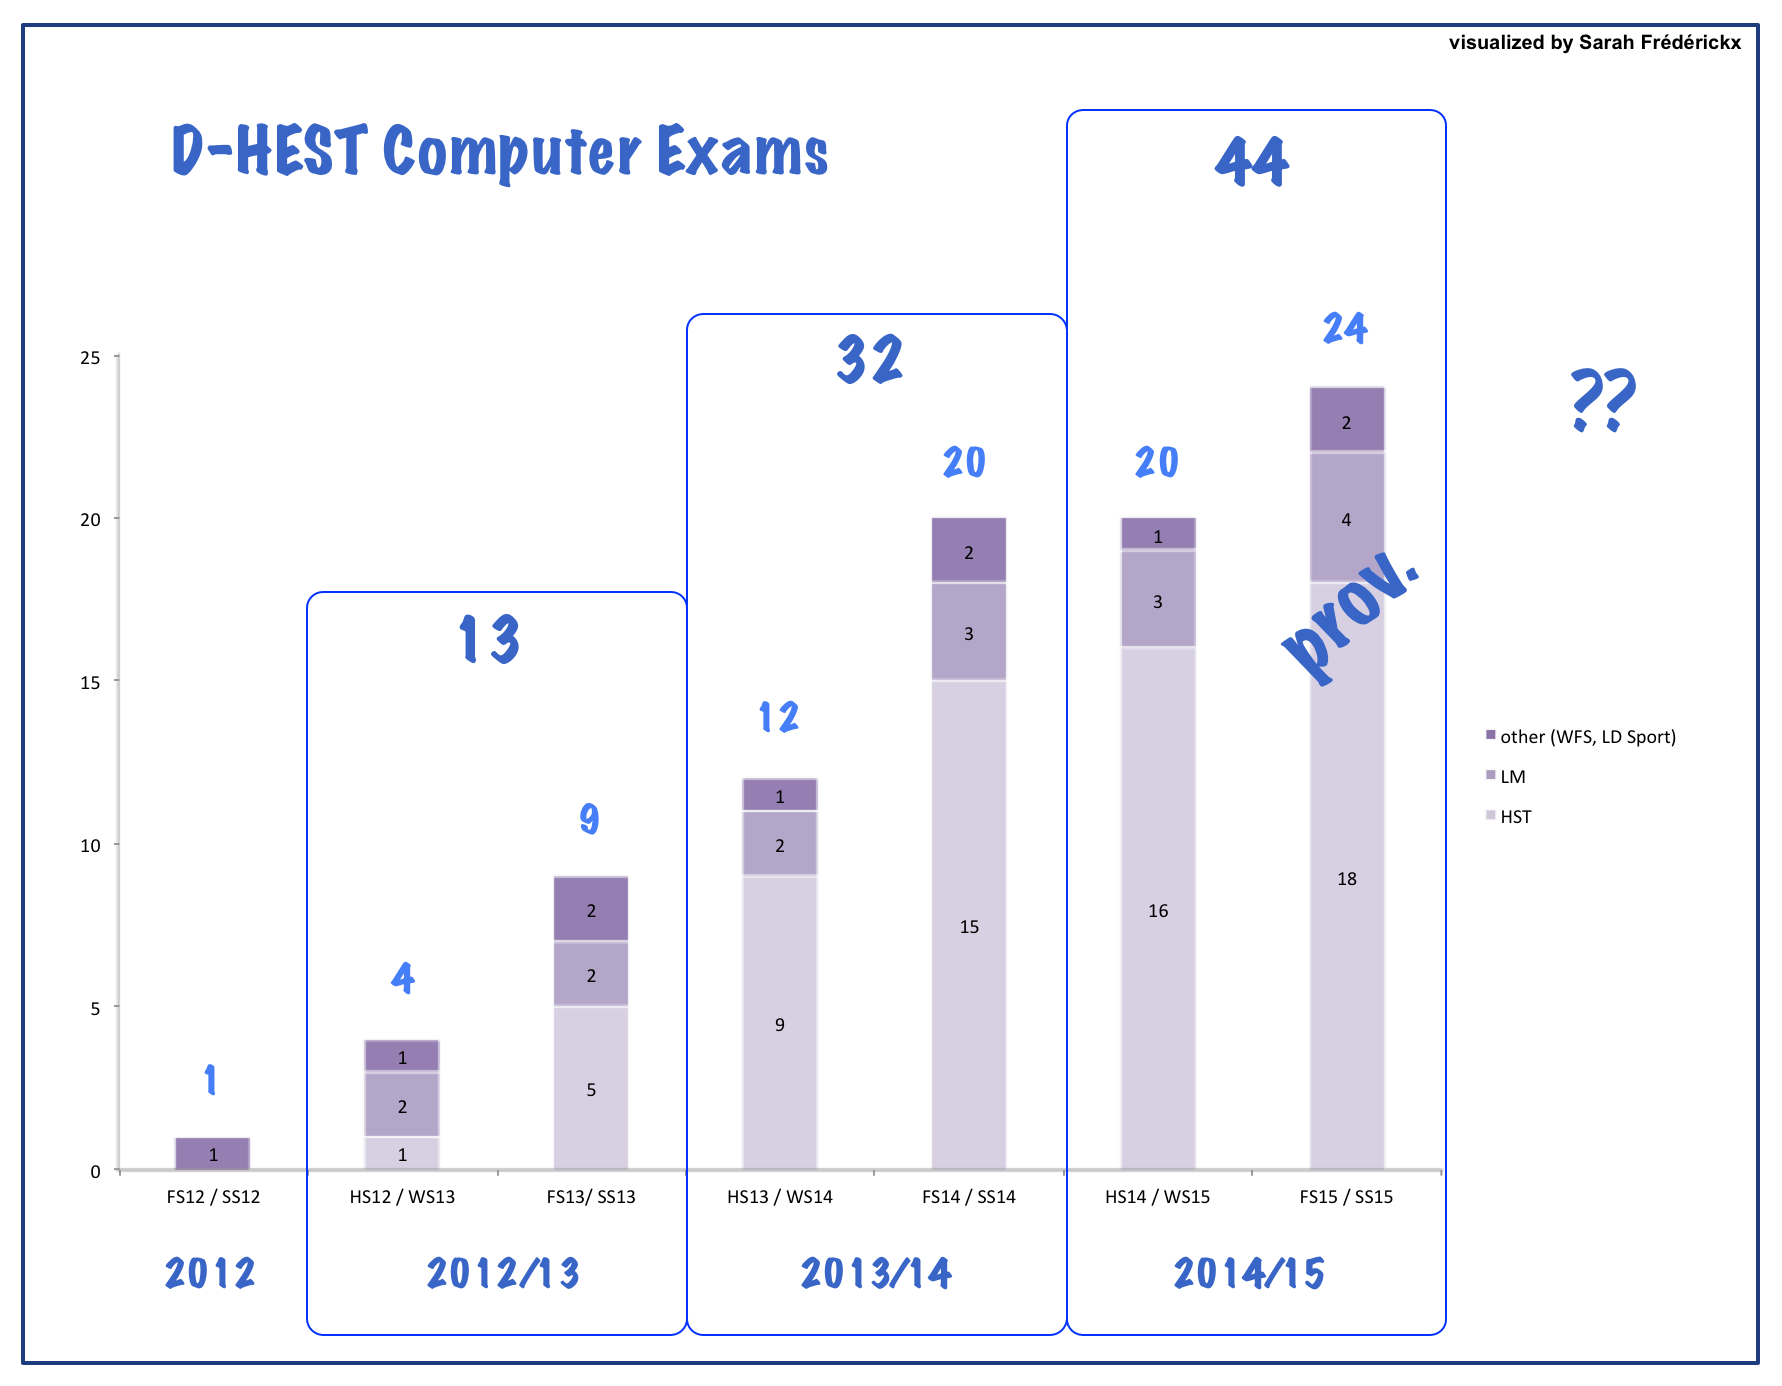 Development of computer exams @D-HEST